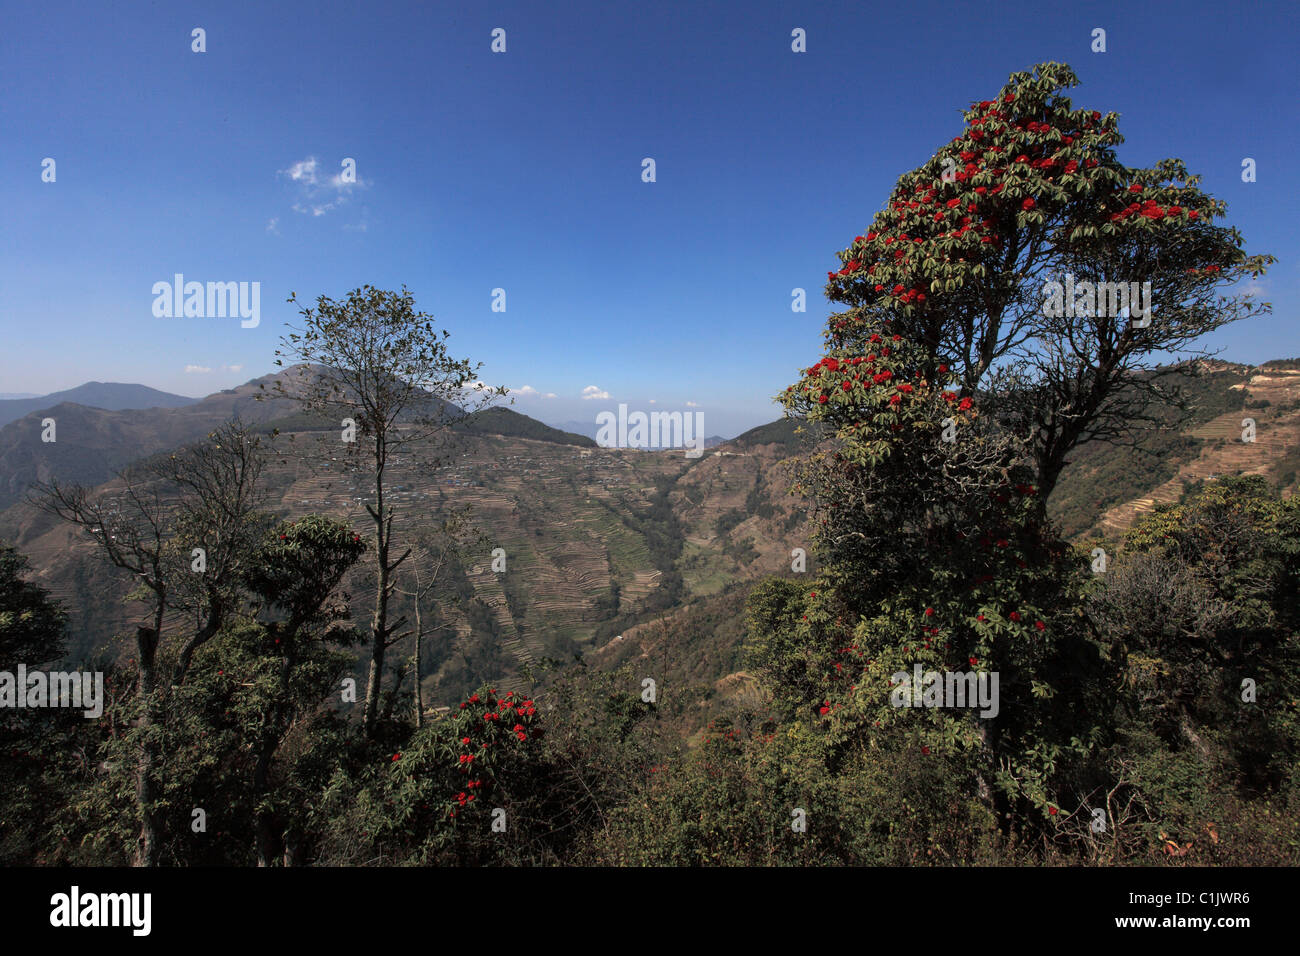 Landscape in the Nepali hills Stock Photo